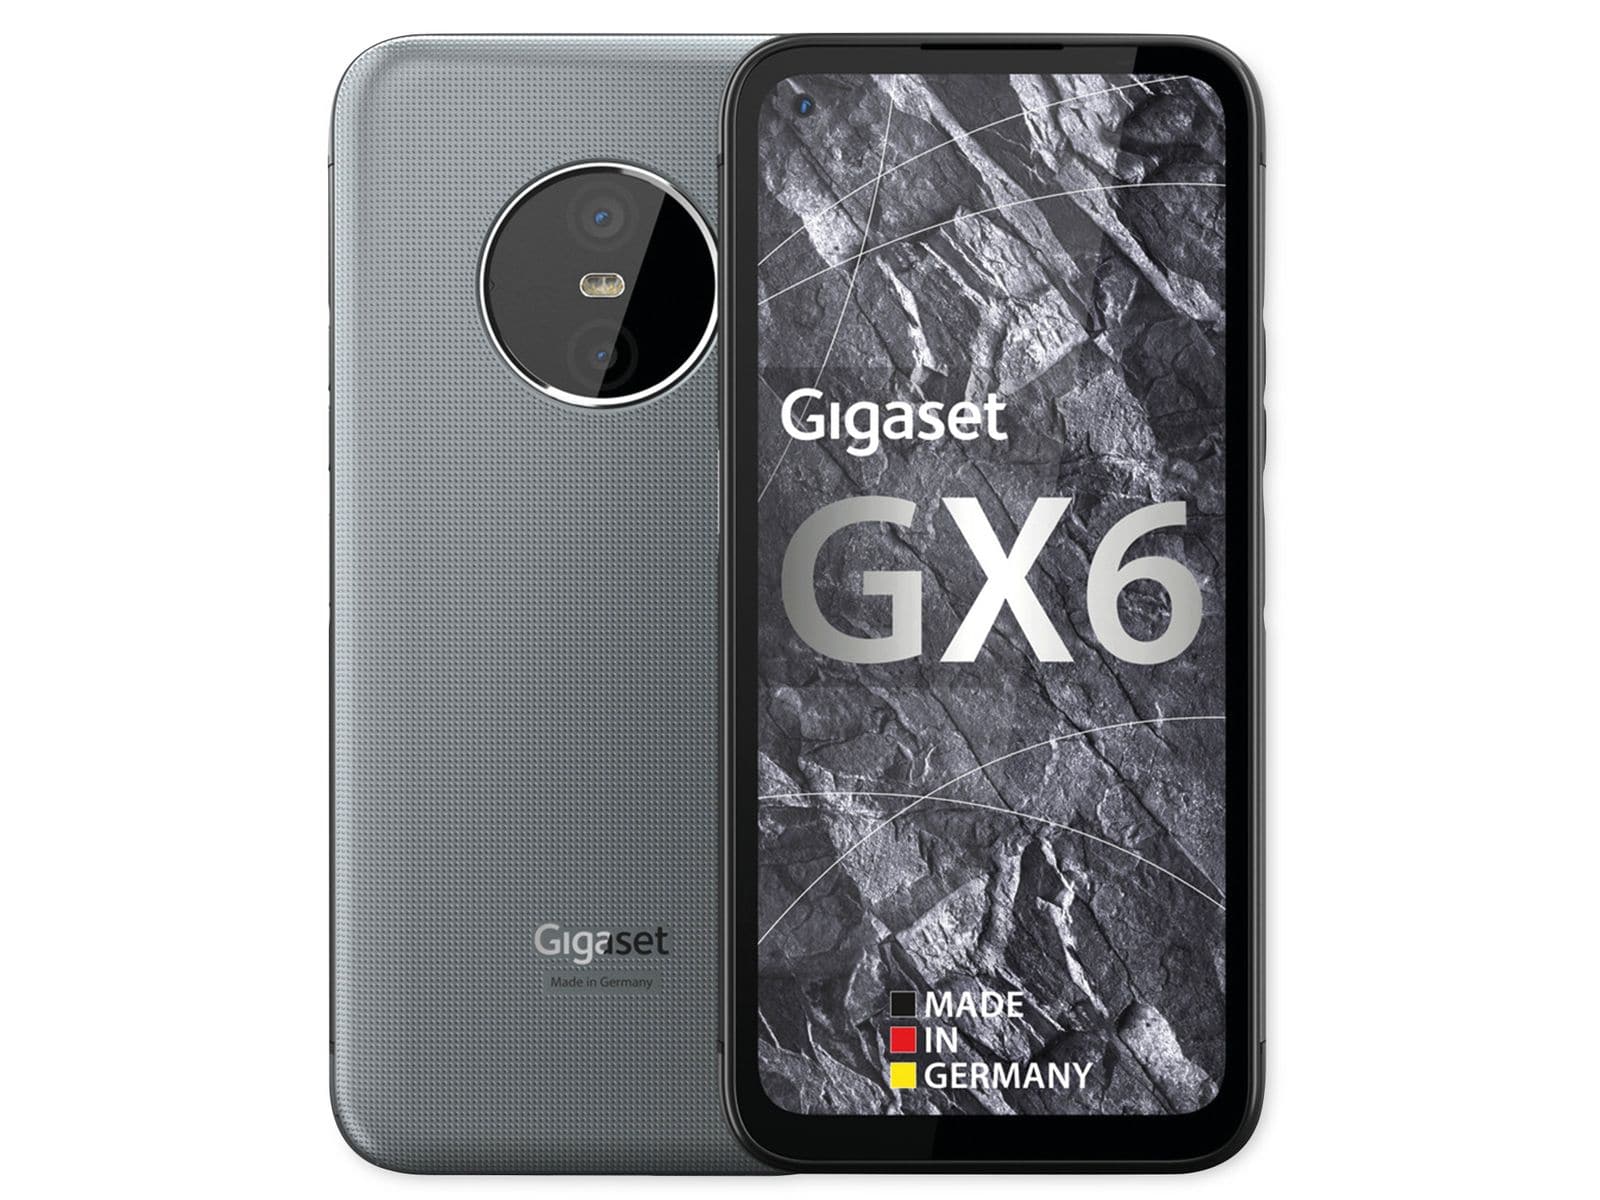 GIGASET Smartphone GX6, grau